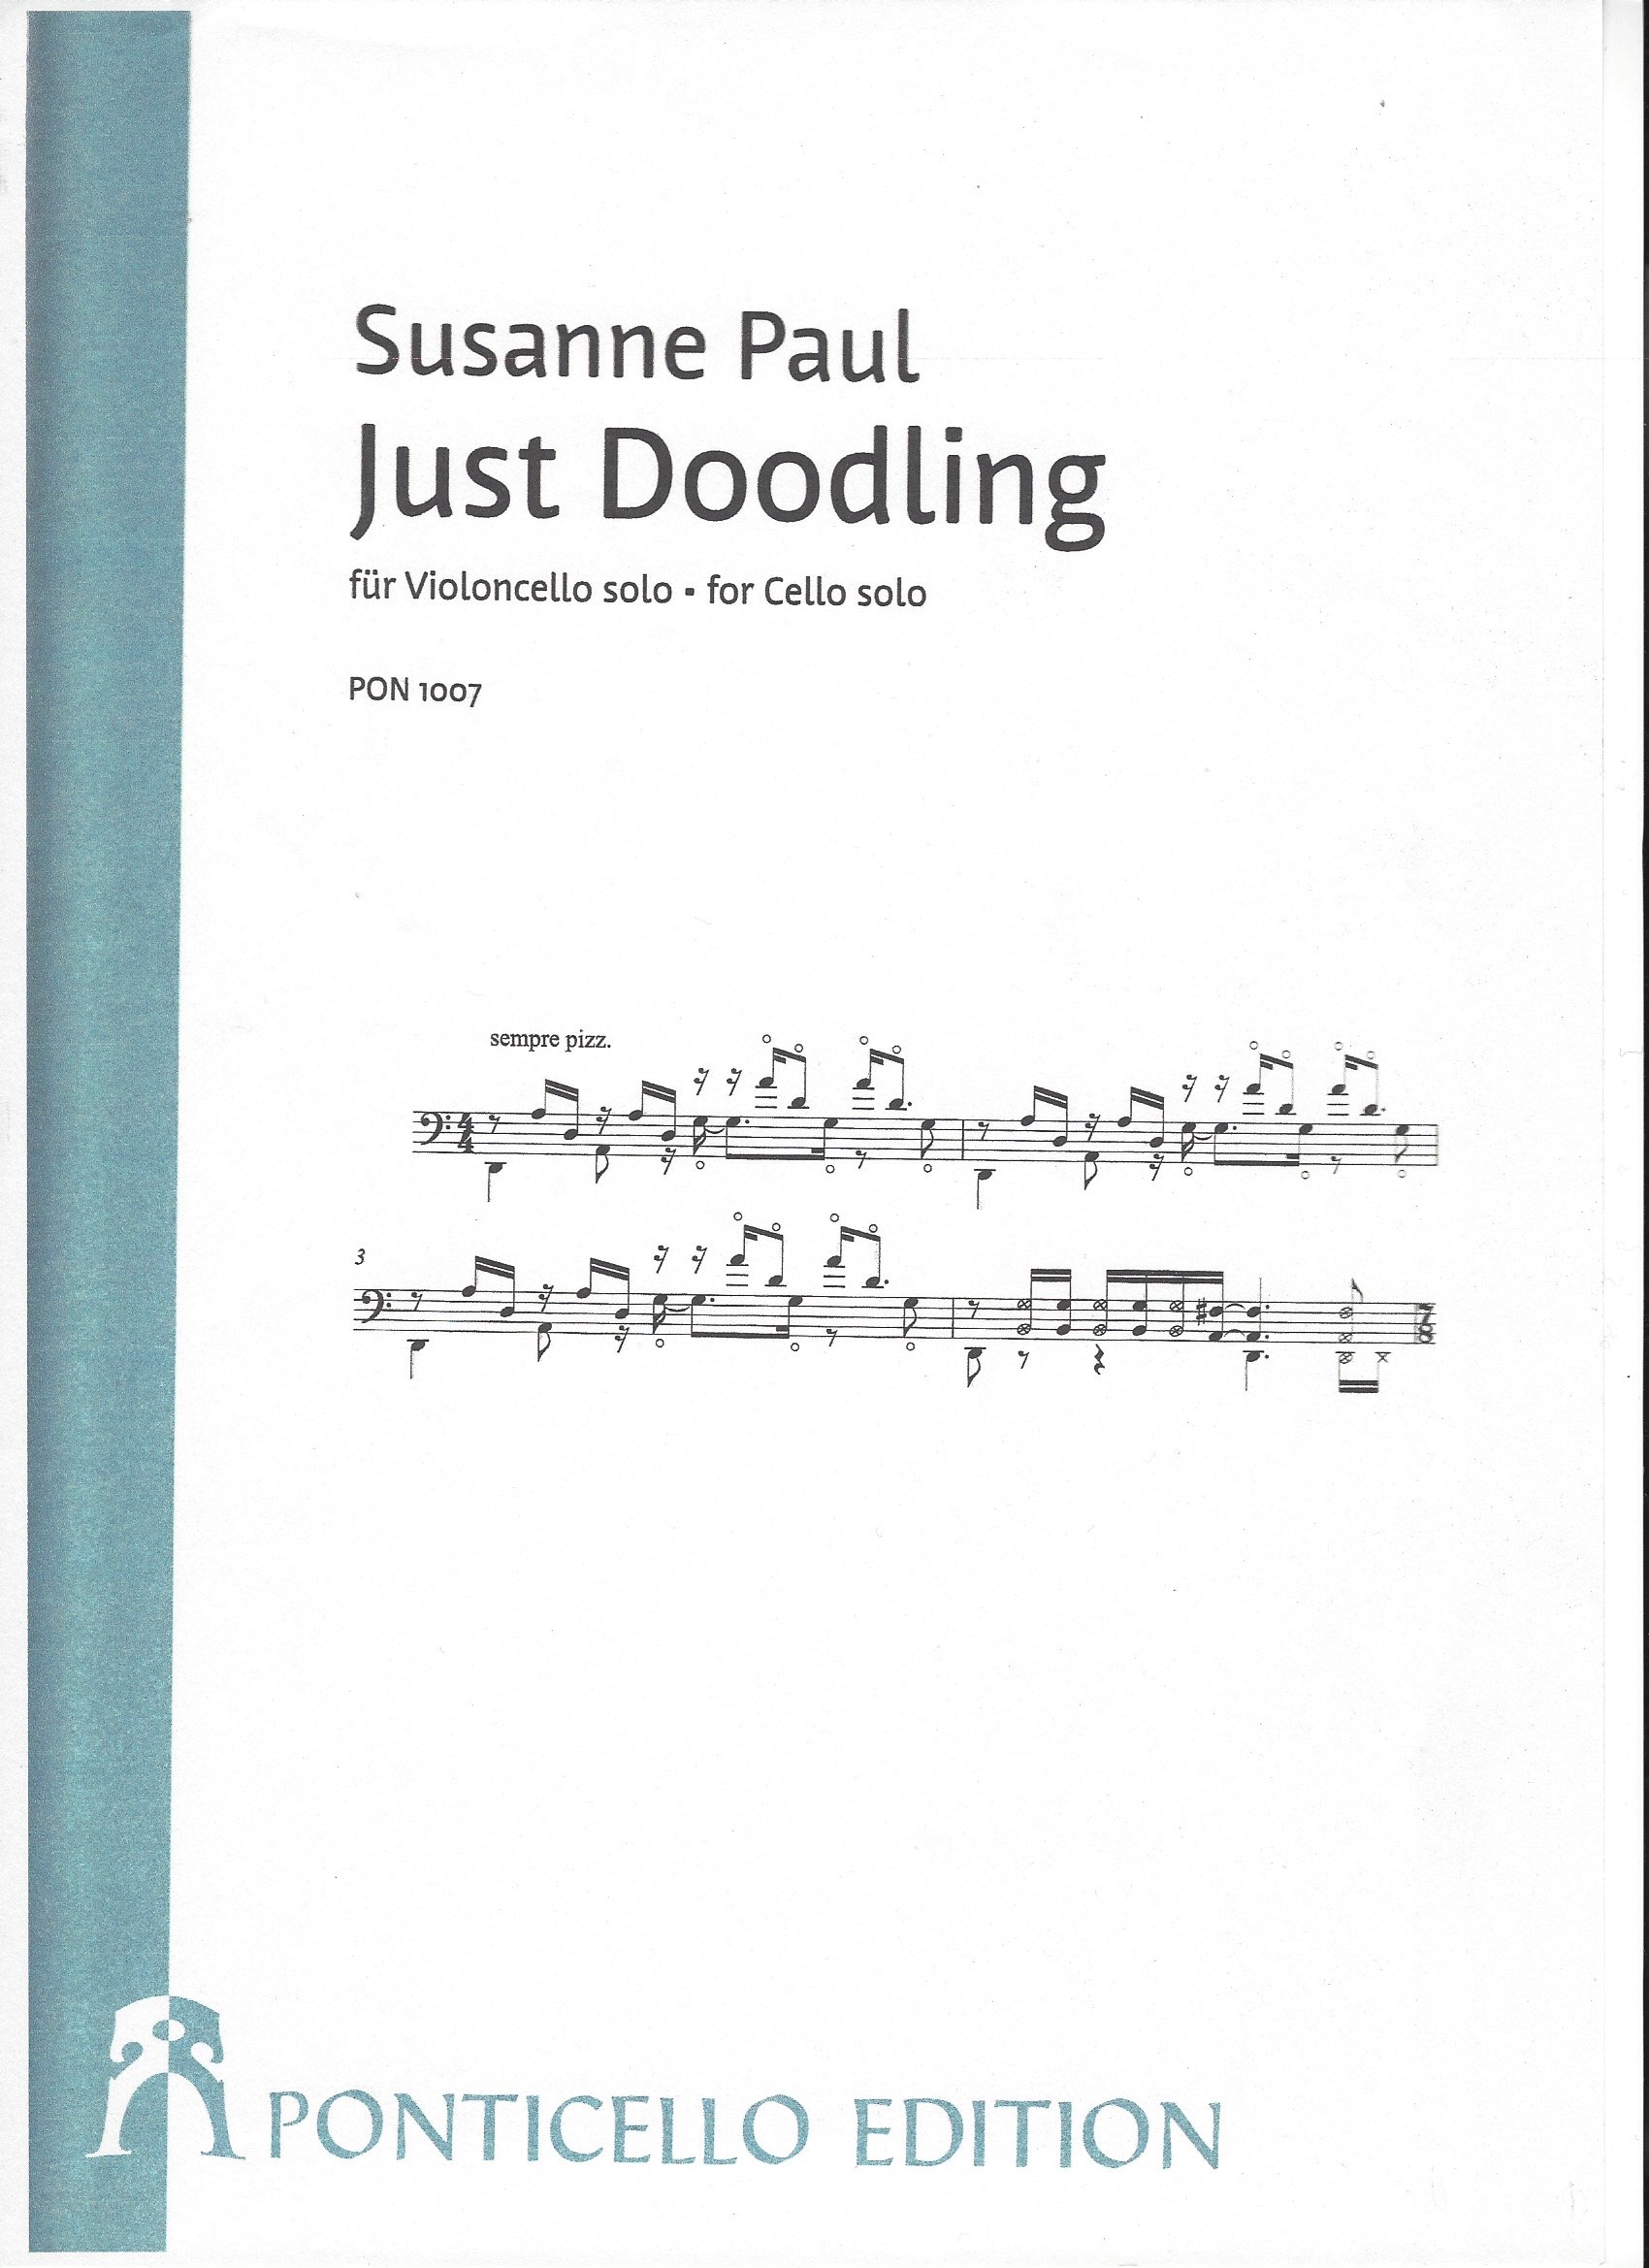 Susanne Paul - Just Doodling - Titelblatt